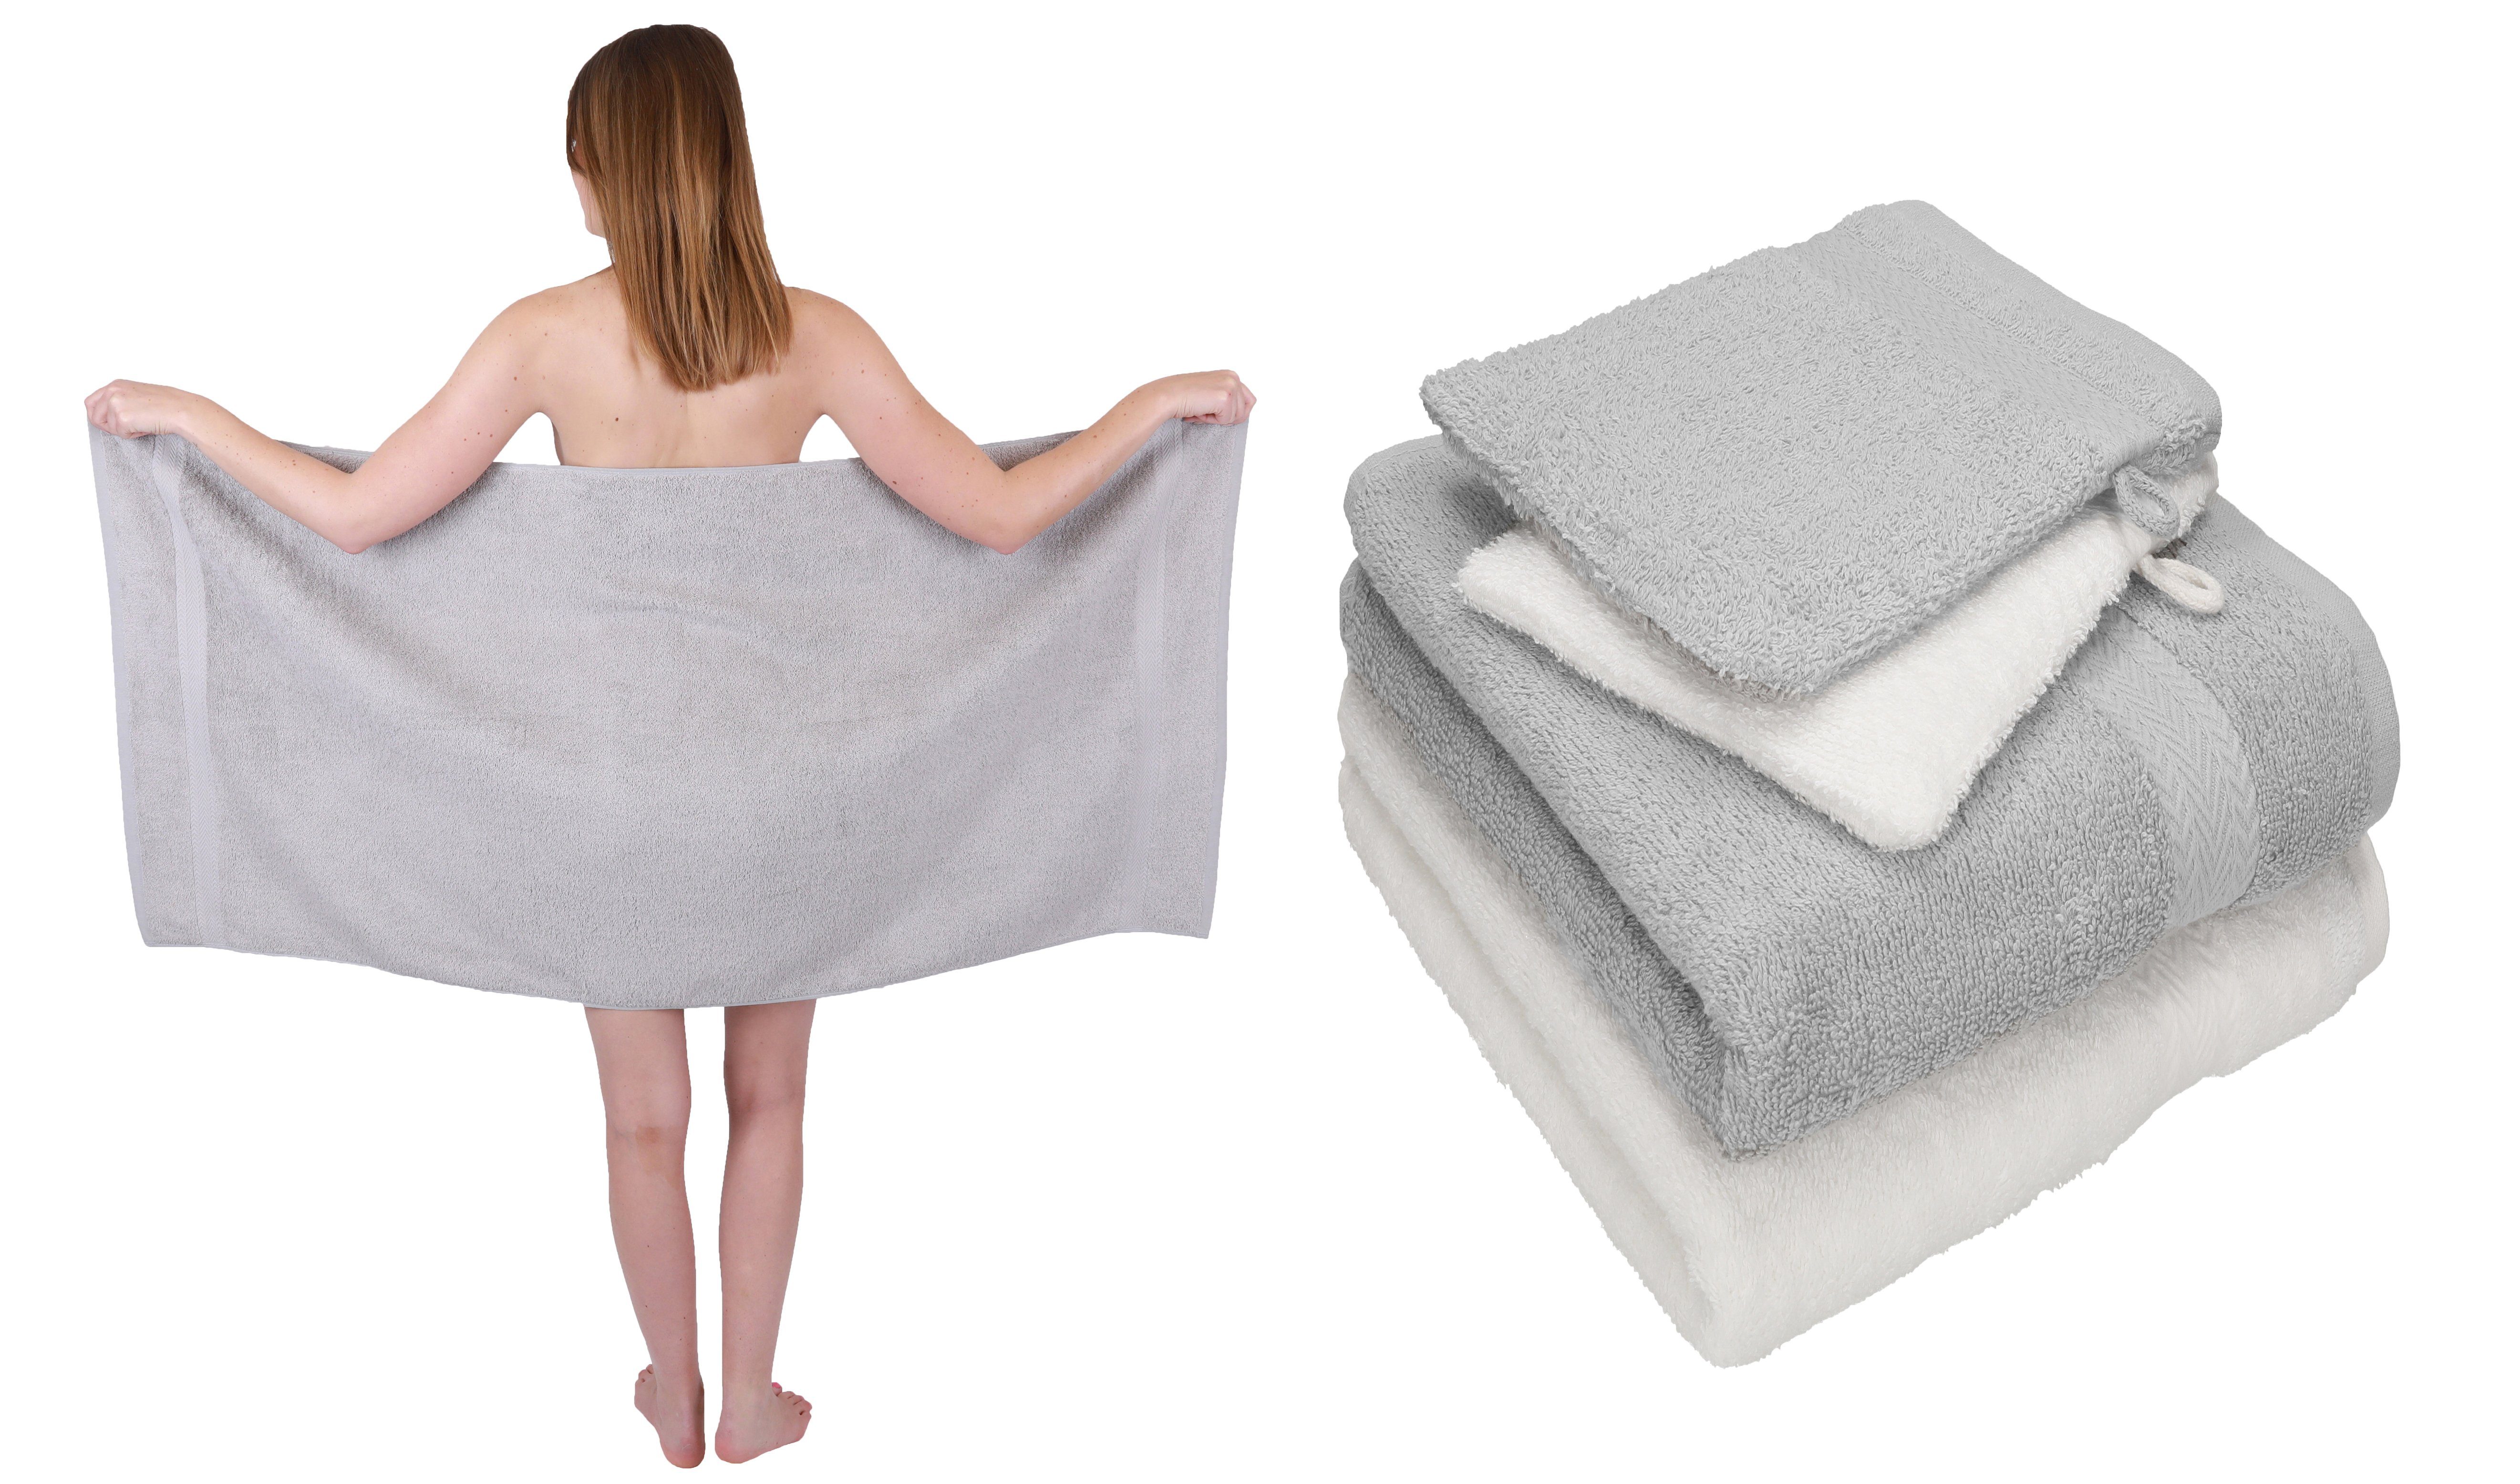 Betz Handtuch Set 5 TLG. Handtuch Set Single Pack 100% Baumwolle 1 Duschtuch 2 Handtücher 2 Waschhandschuhe, 100% Baumwolle silbergrau-weiß